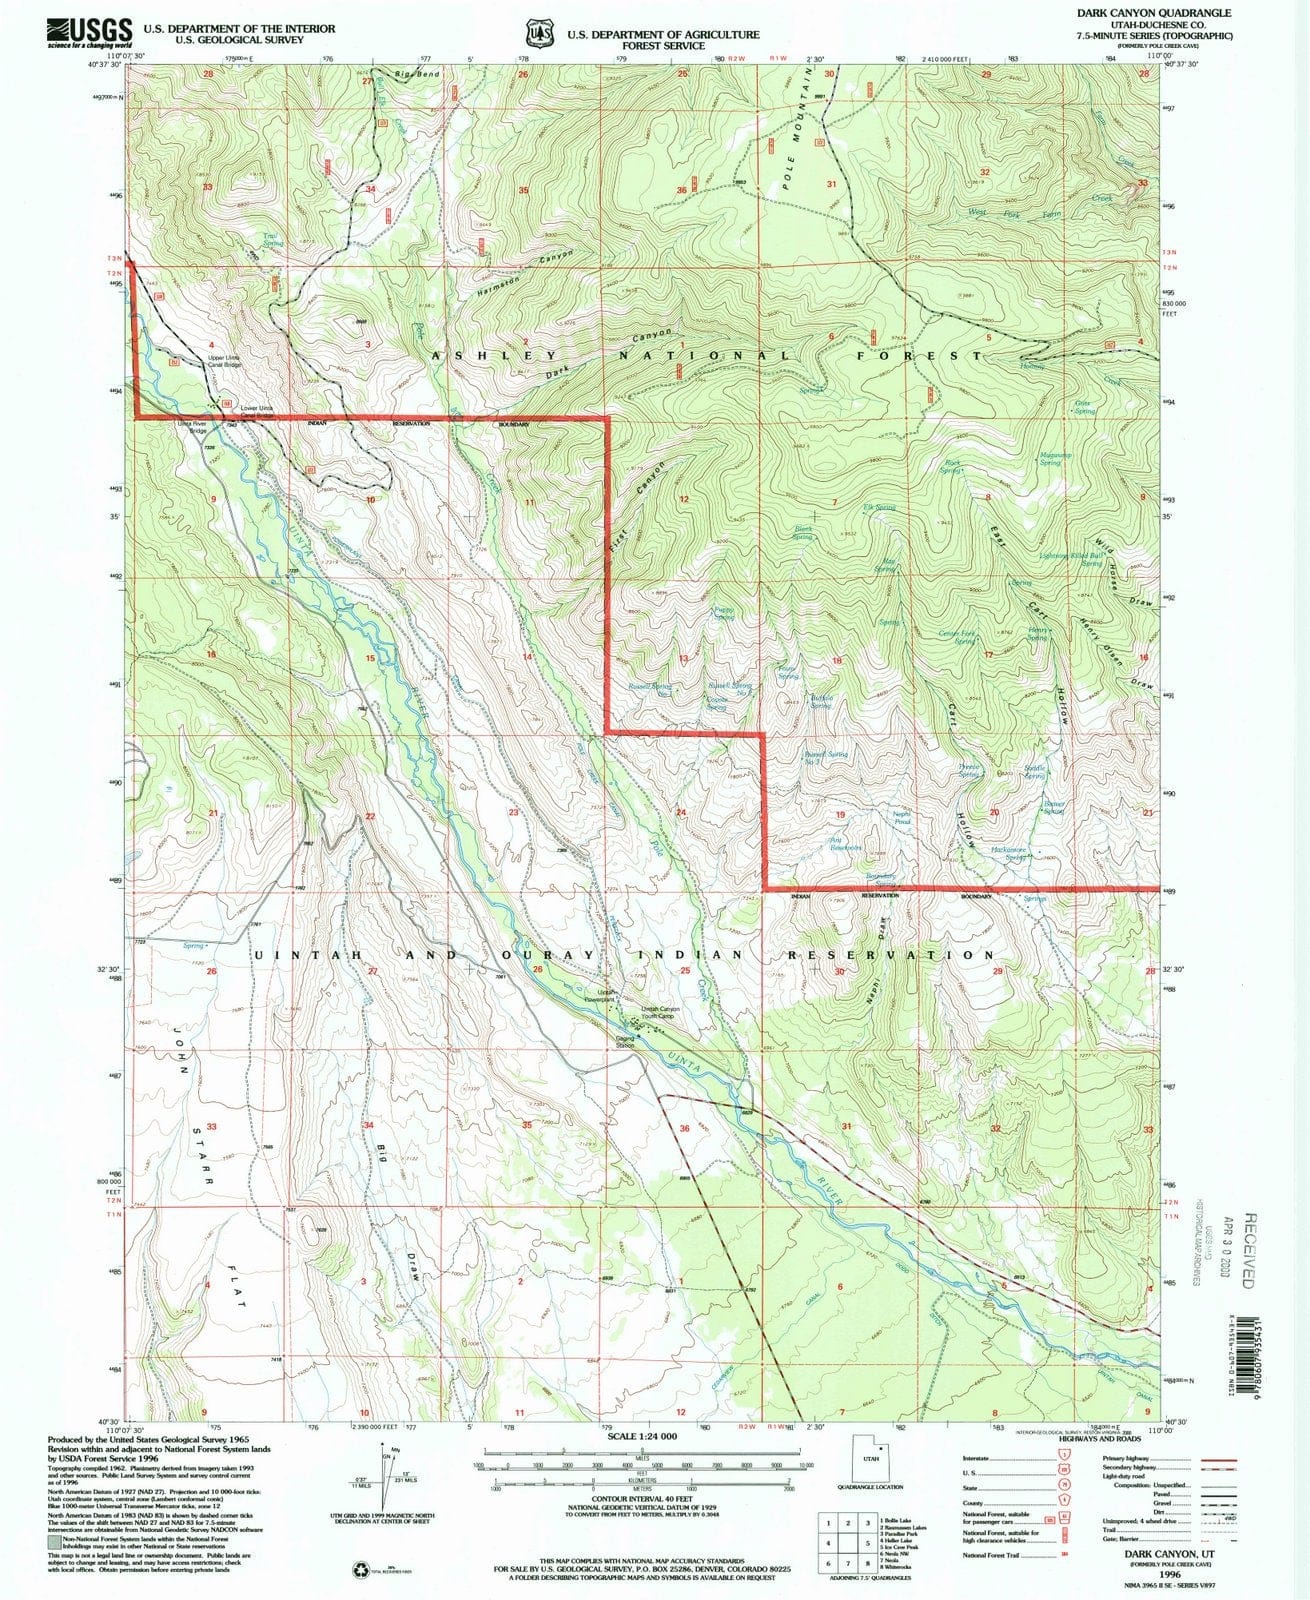 1996 Dark Canyon, UT - Utah - USGS Topographic Map